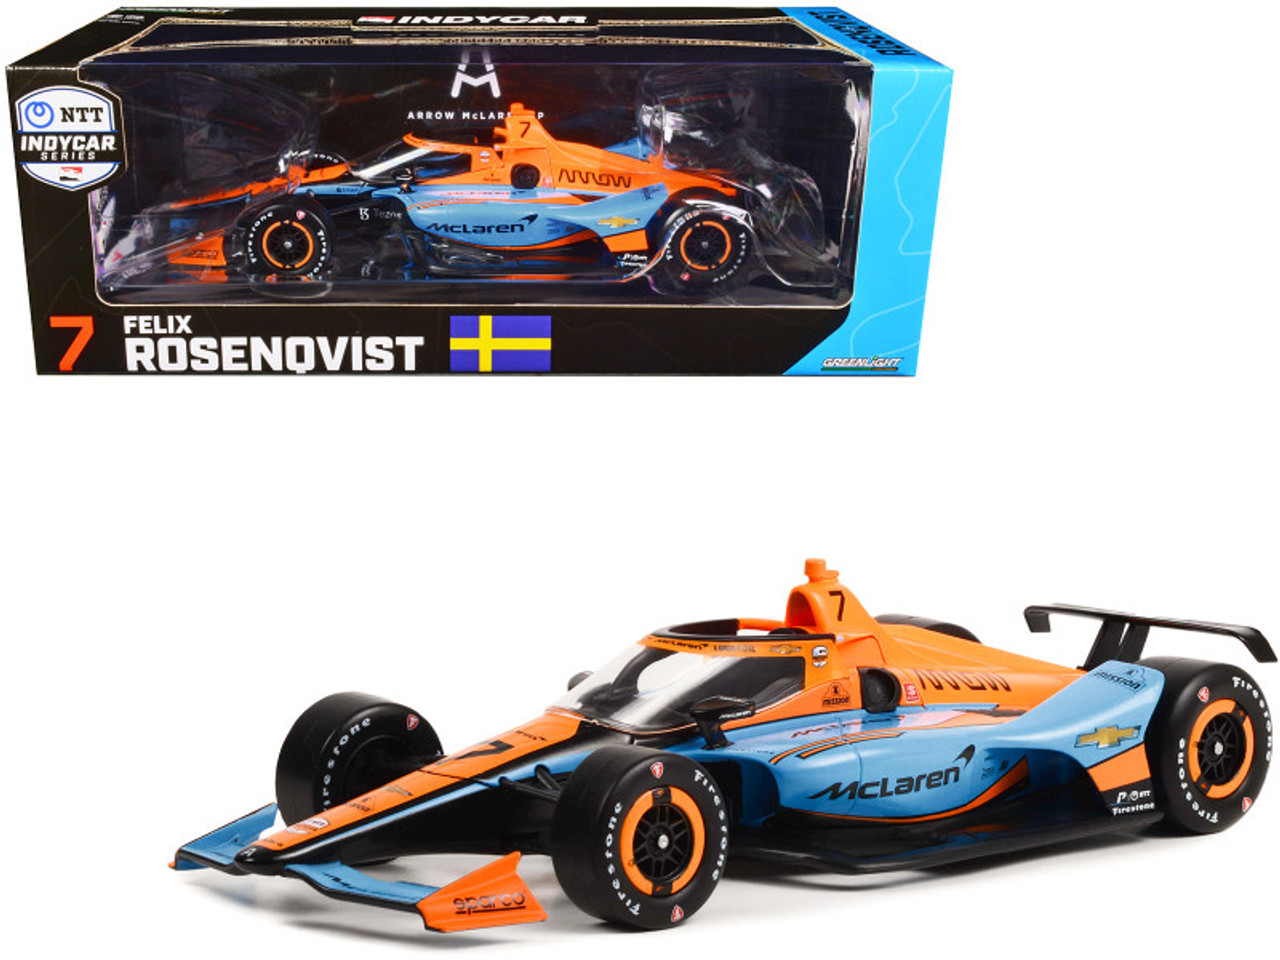 Dallara IndyCar #7 Felix Rosenqvist "Arrow" Arrow McLaren SP "NTT IndyCar Series" (2022) 1/18 Diecast Model Car by Greenlight